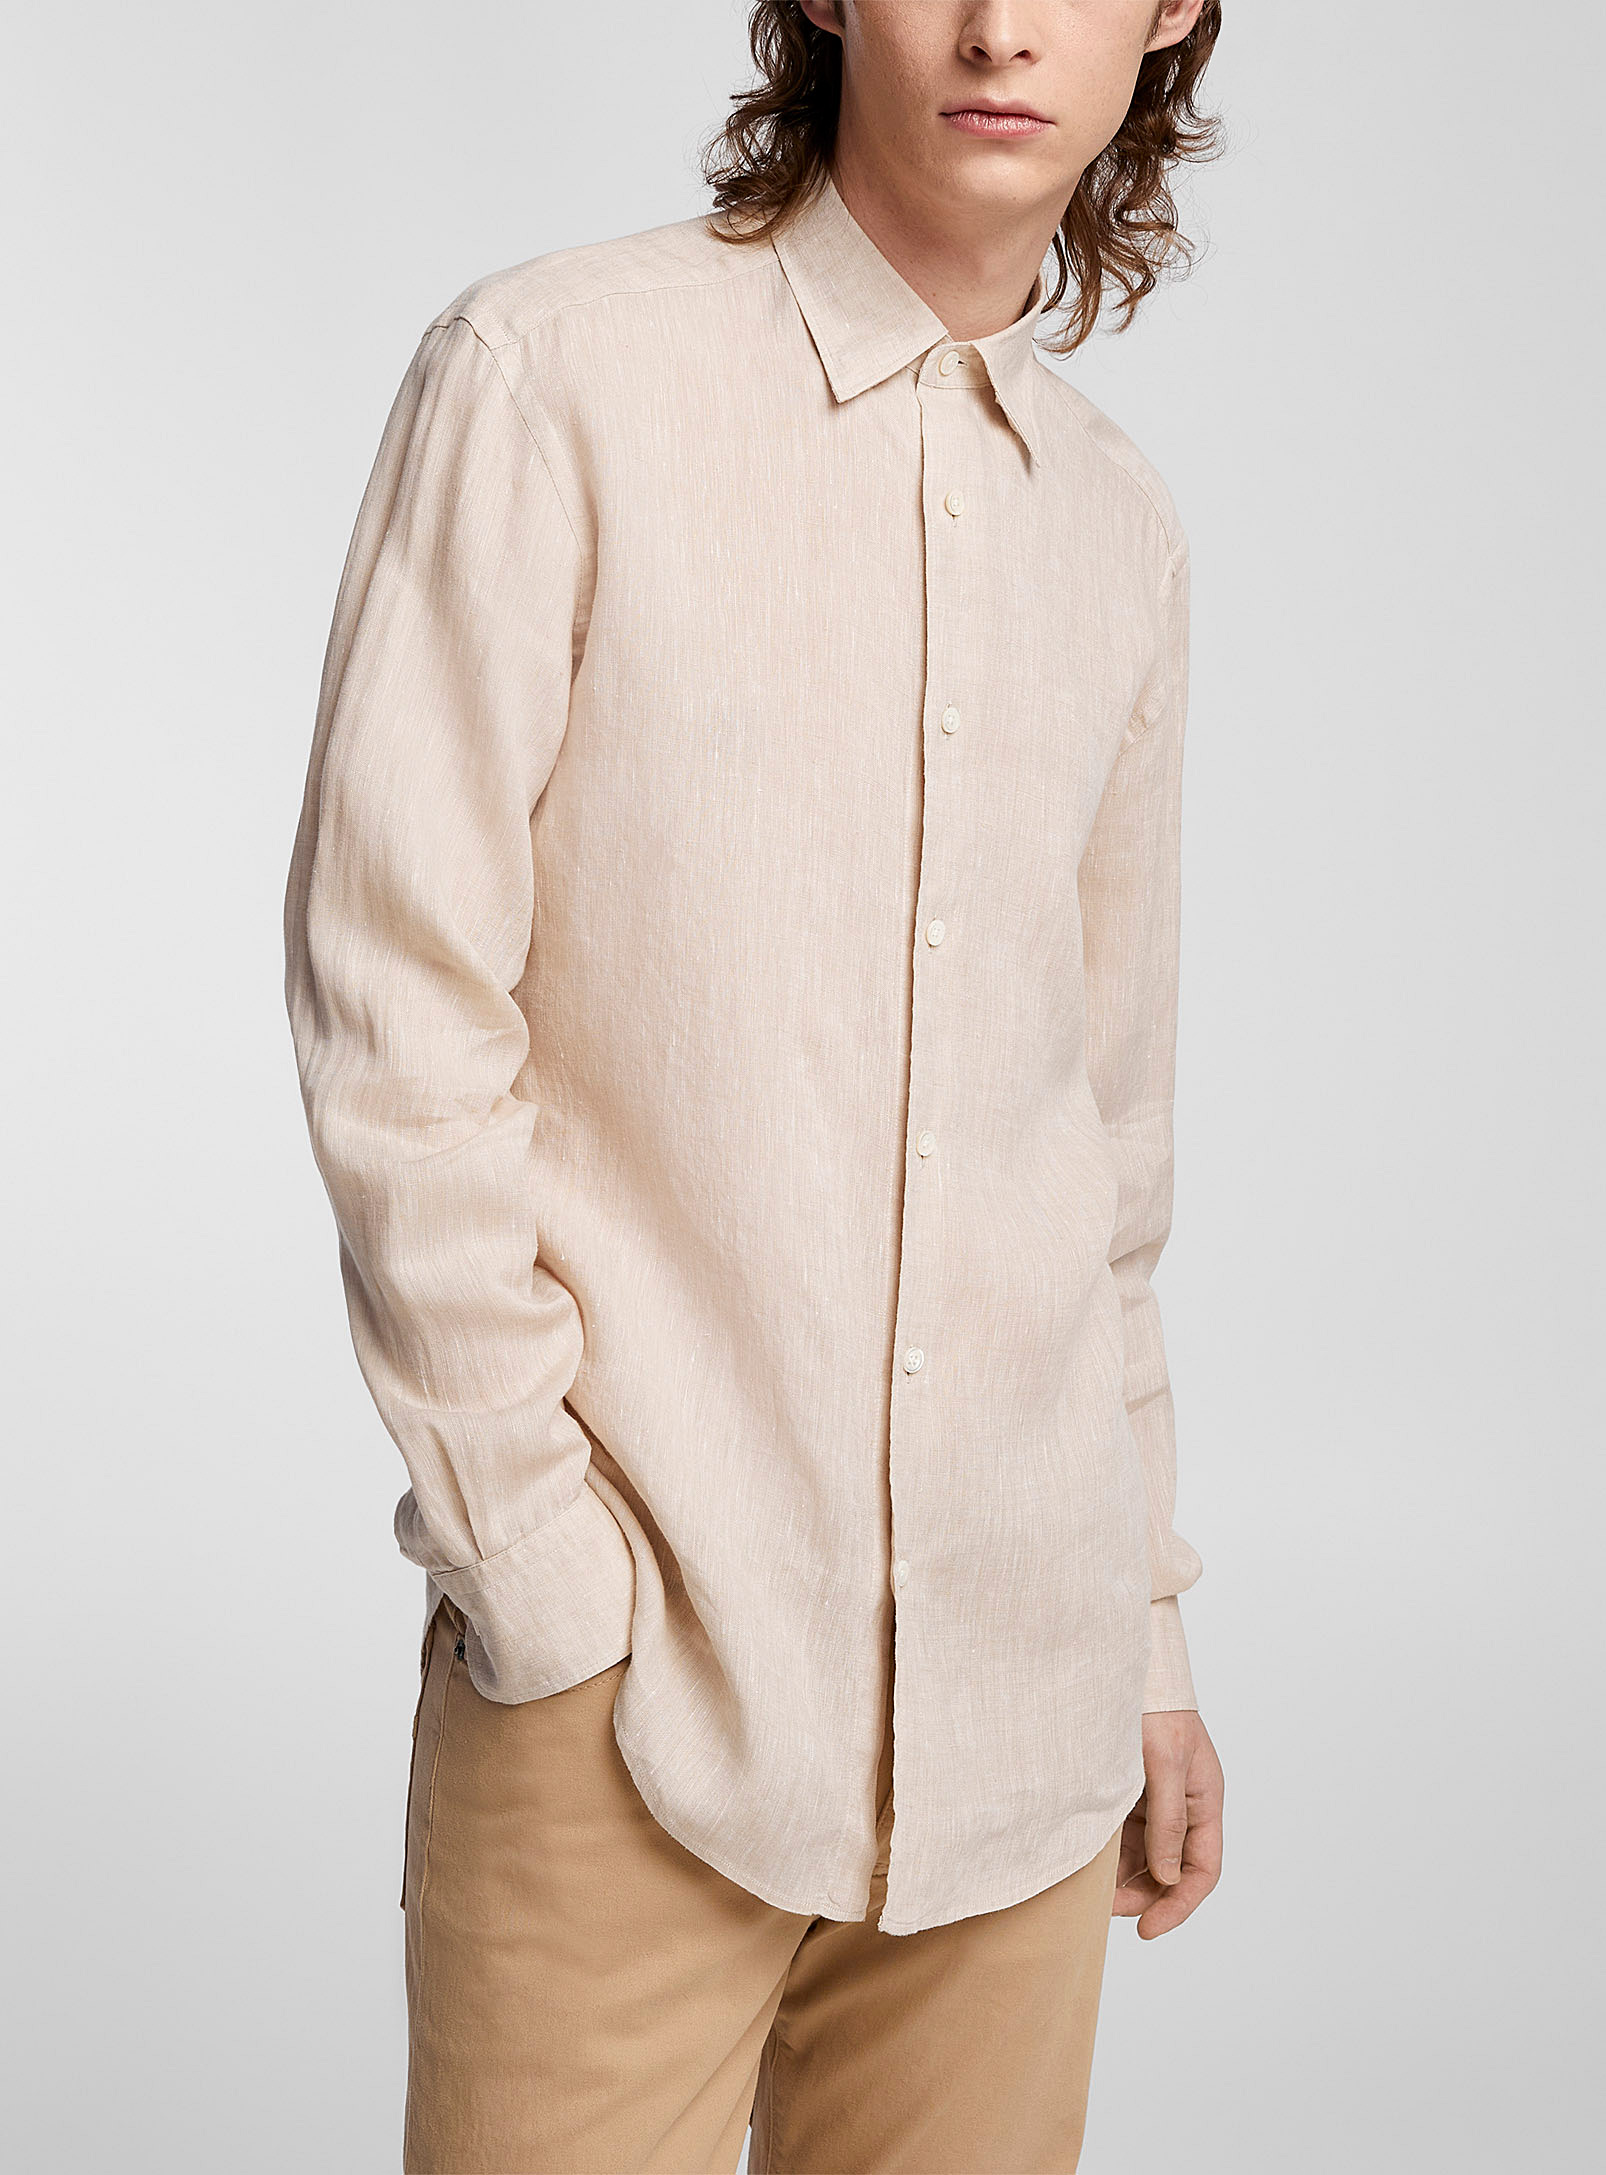 Zegna - Men's Sand-coloured chambray linen shirt